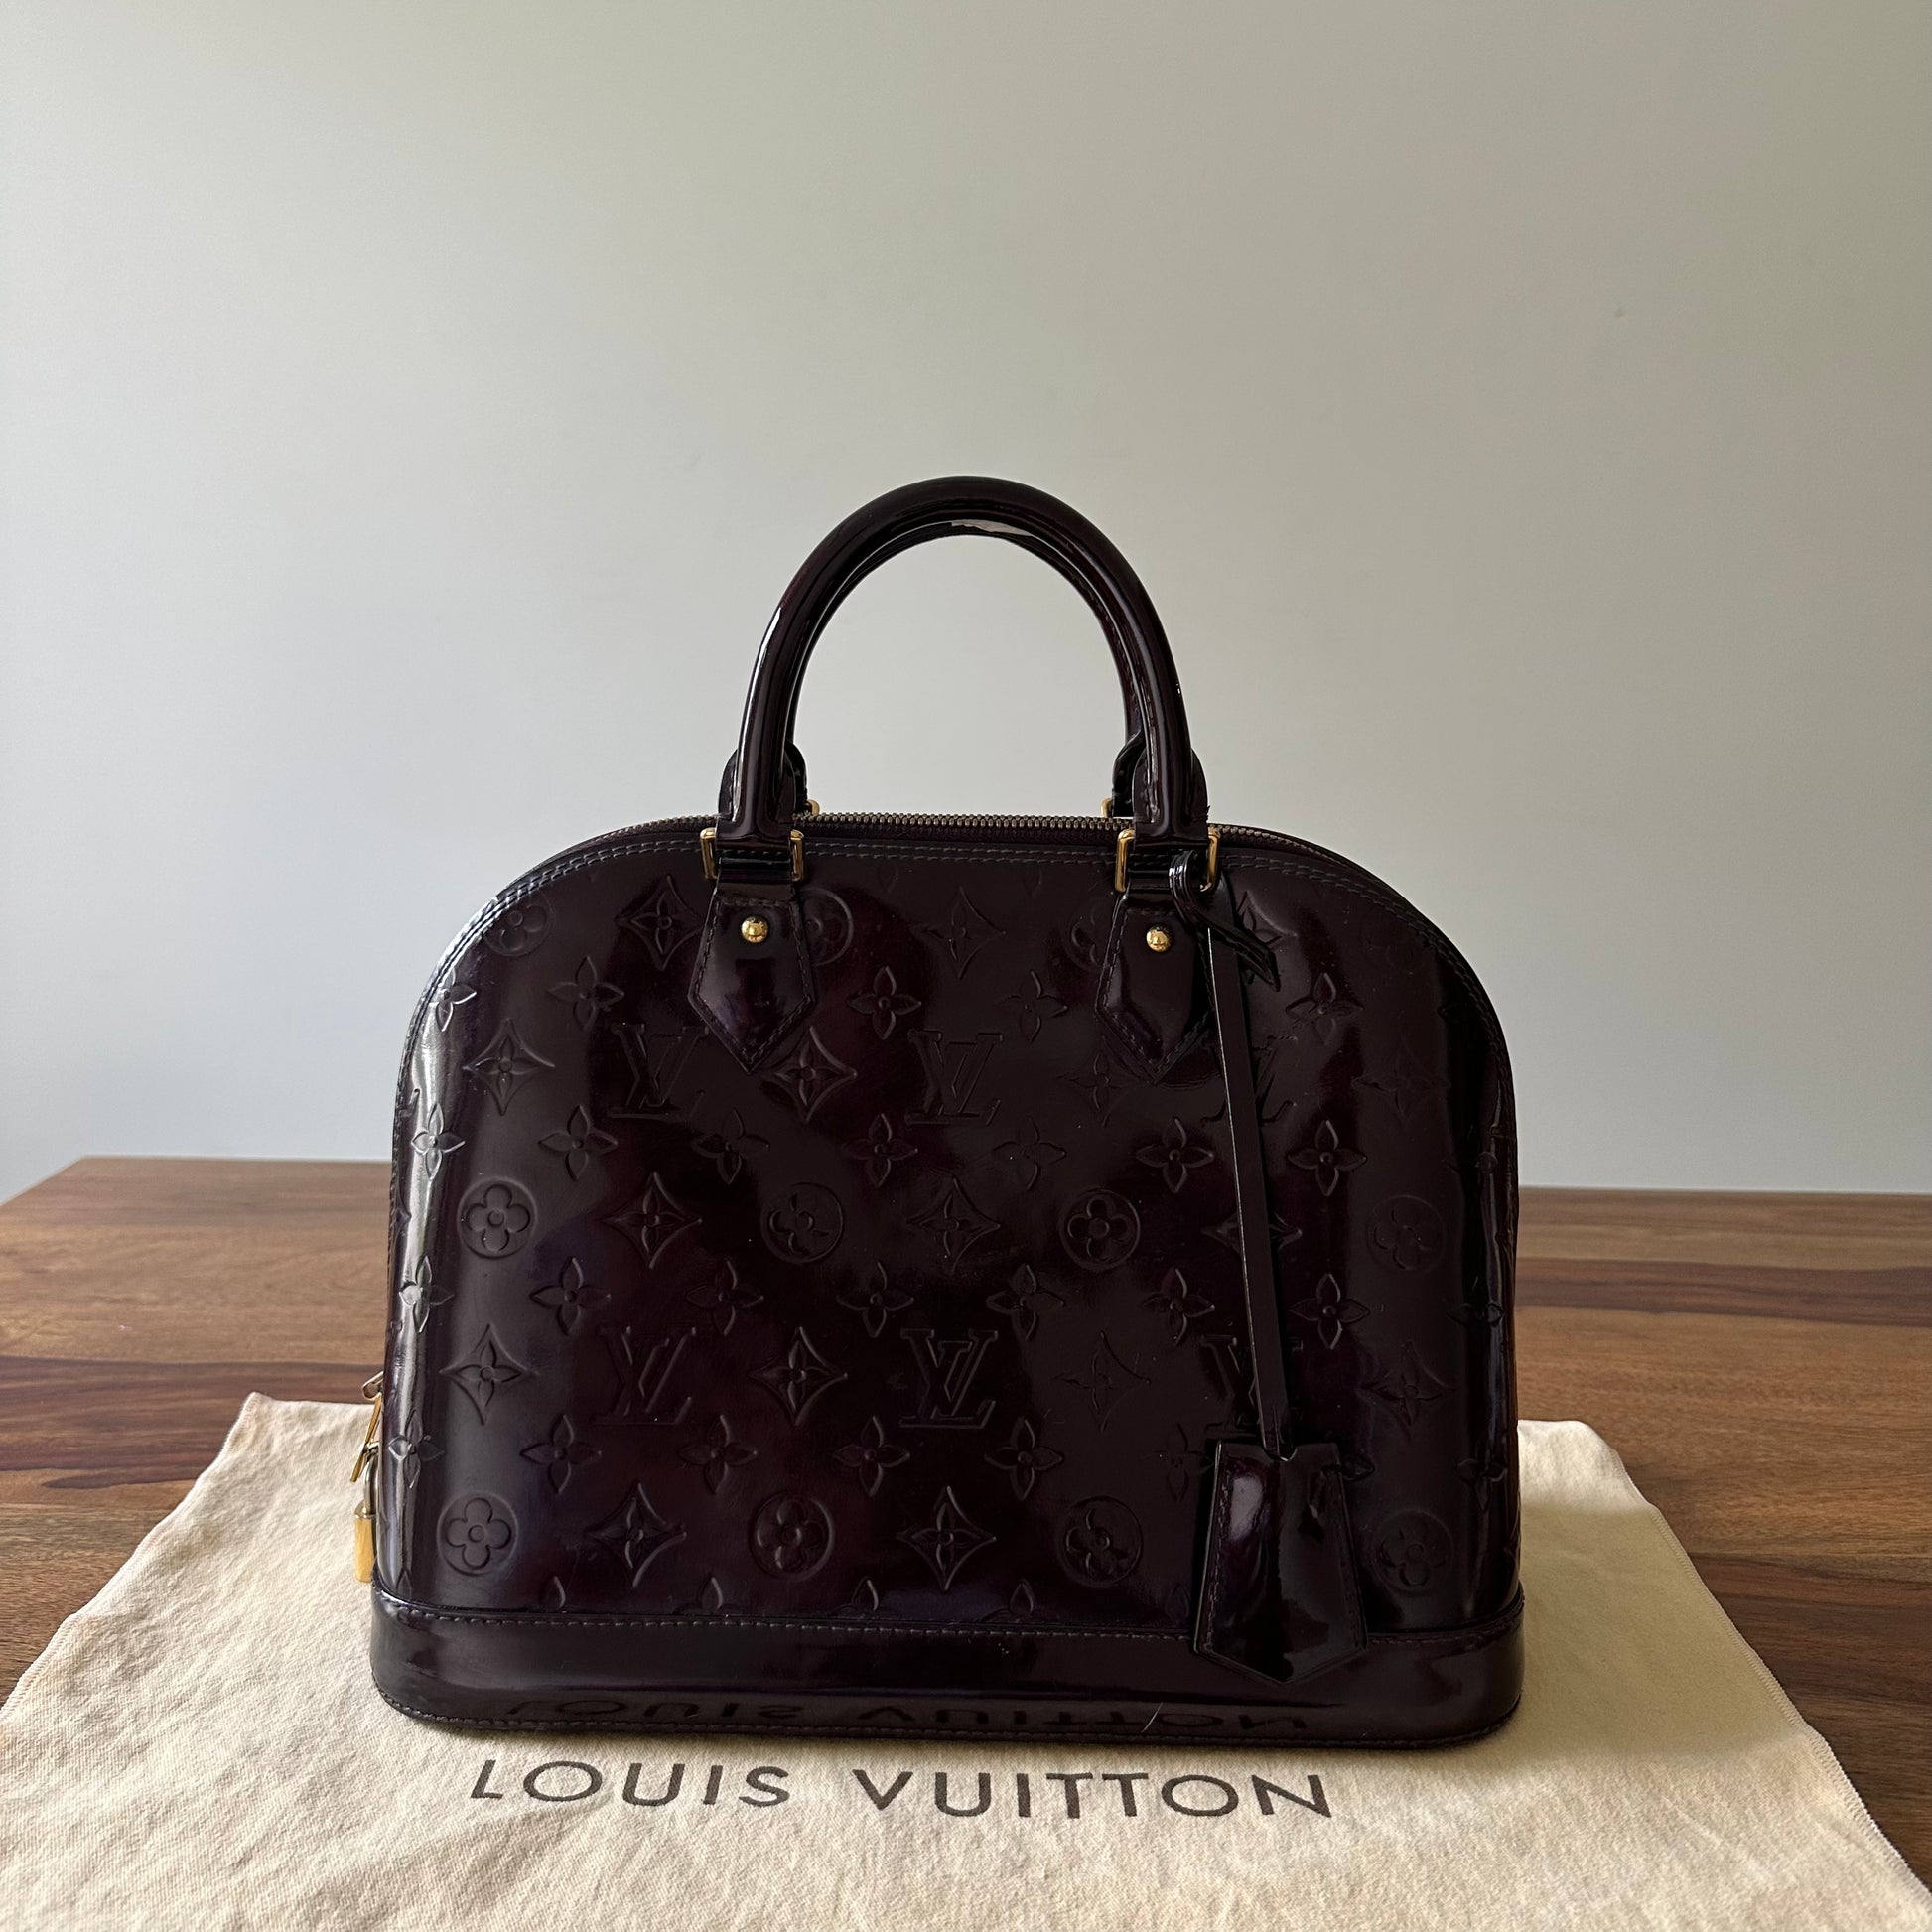 Buy Louis Vuitton Vernis Online In India -  India